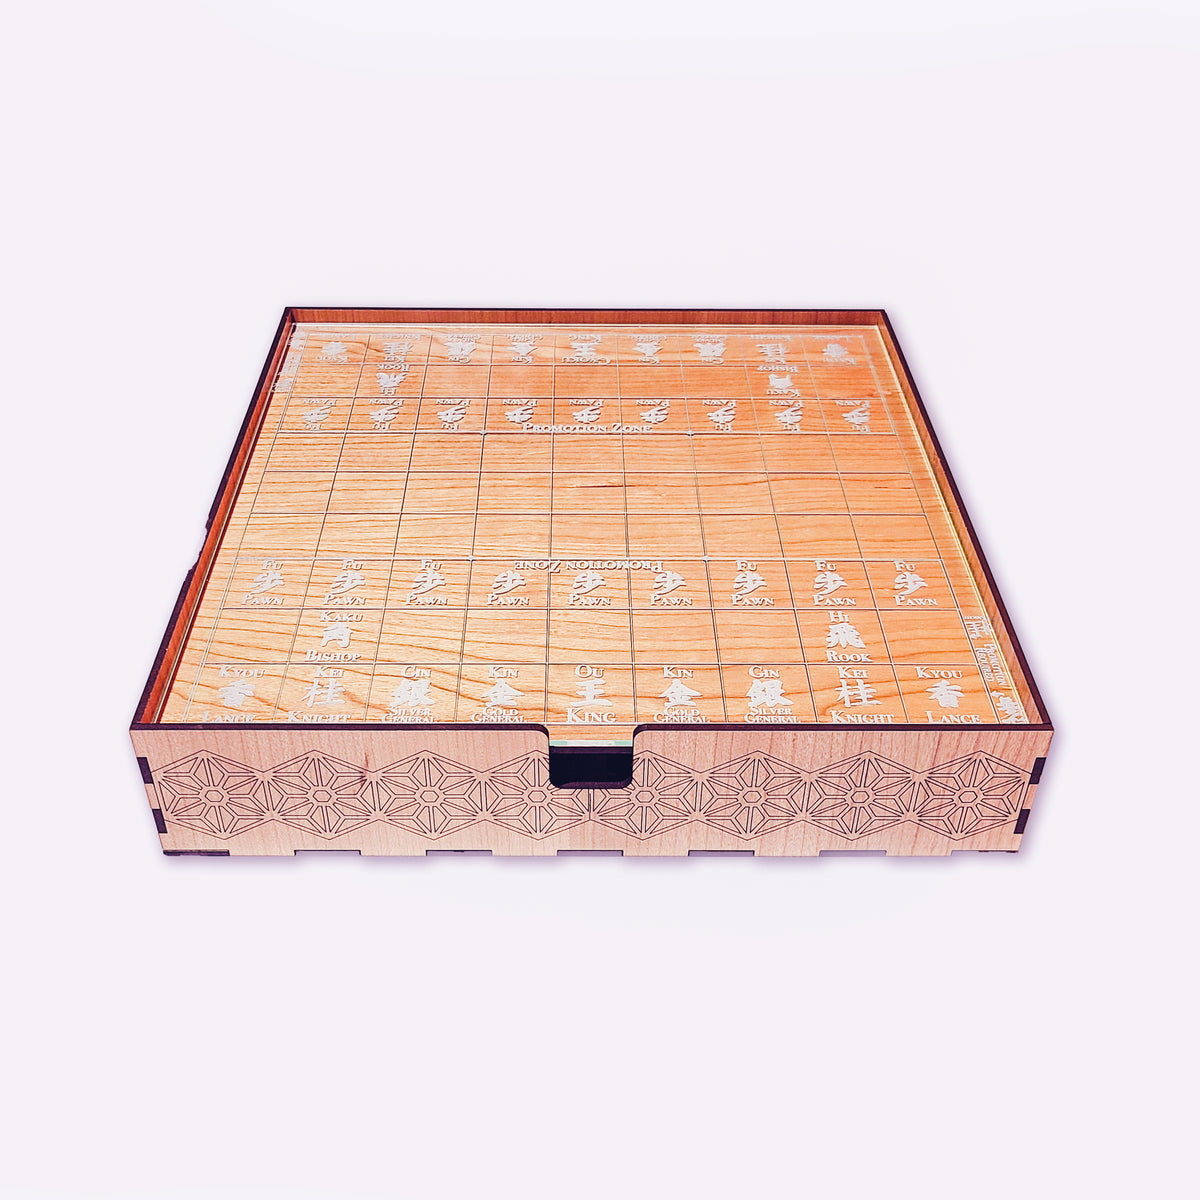 Variant - Shogi - Chess Forums 